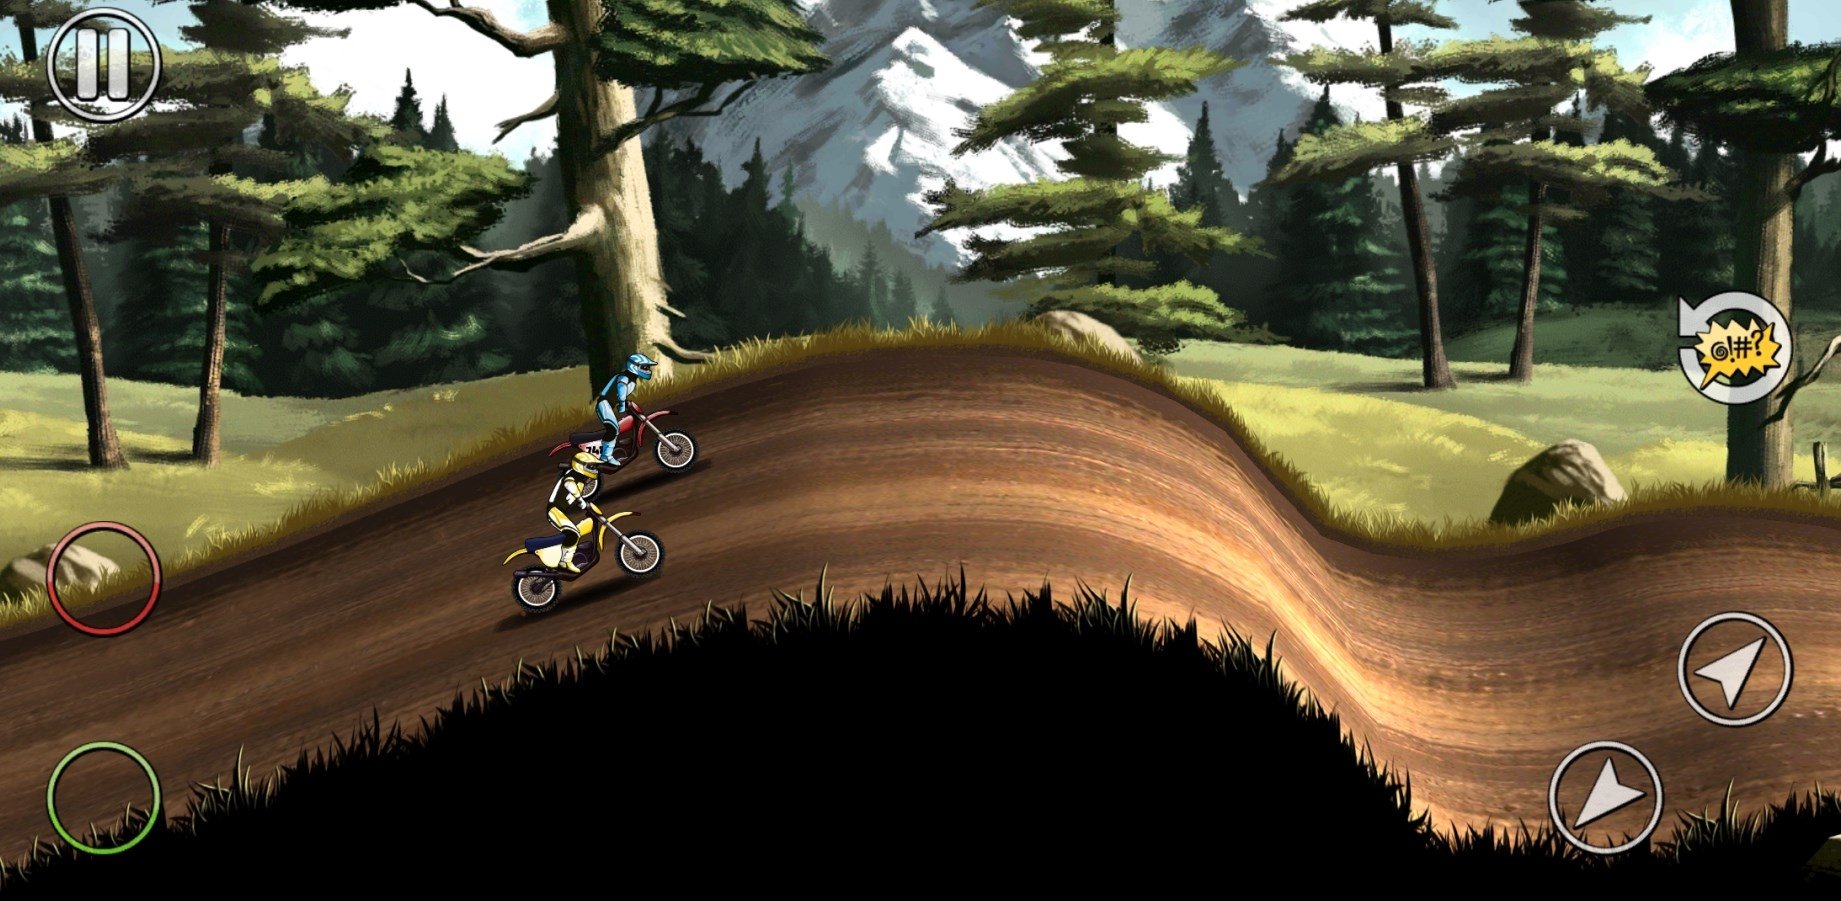 Sunset Bike Racing - Motocross for mac download free